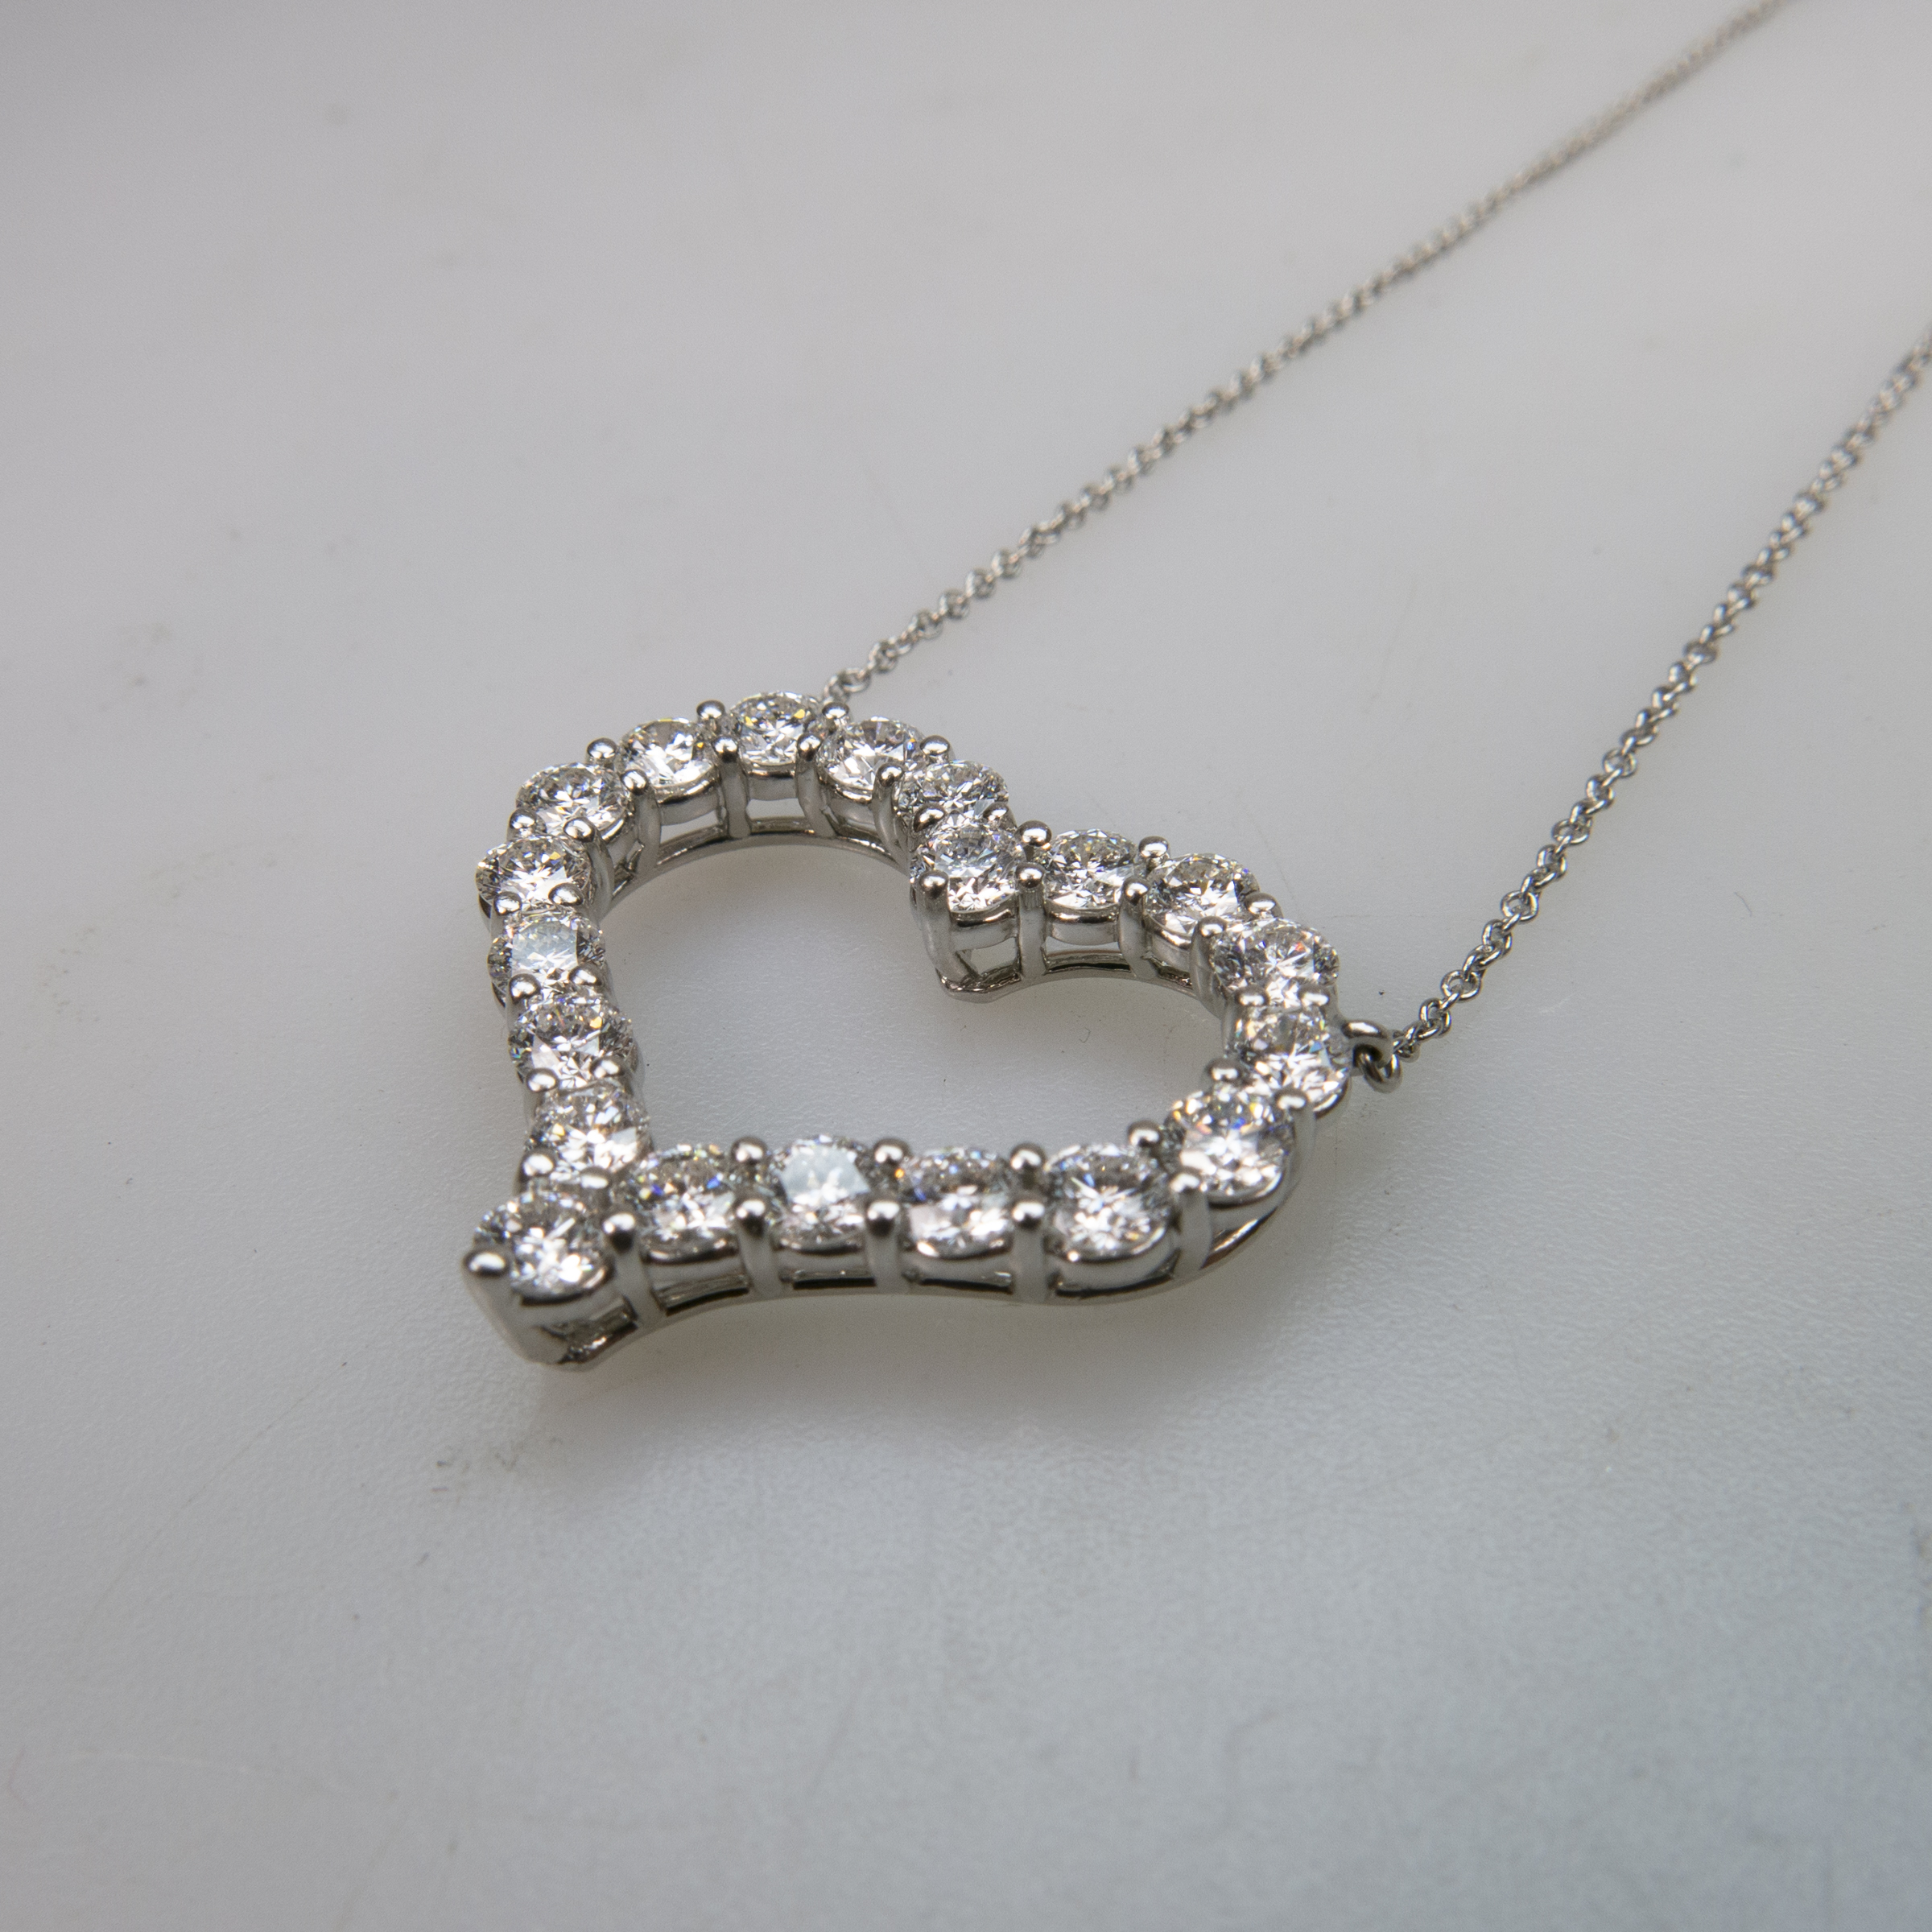 Tiffany & Co. Platinum Heart Pendant And Chain